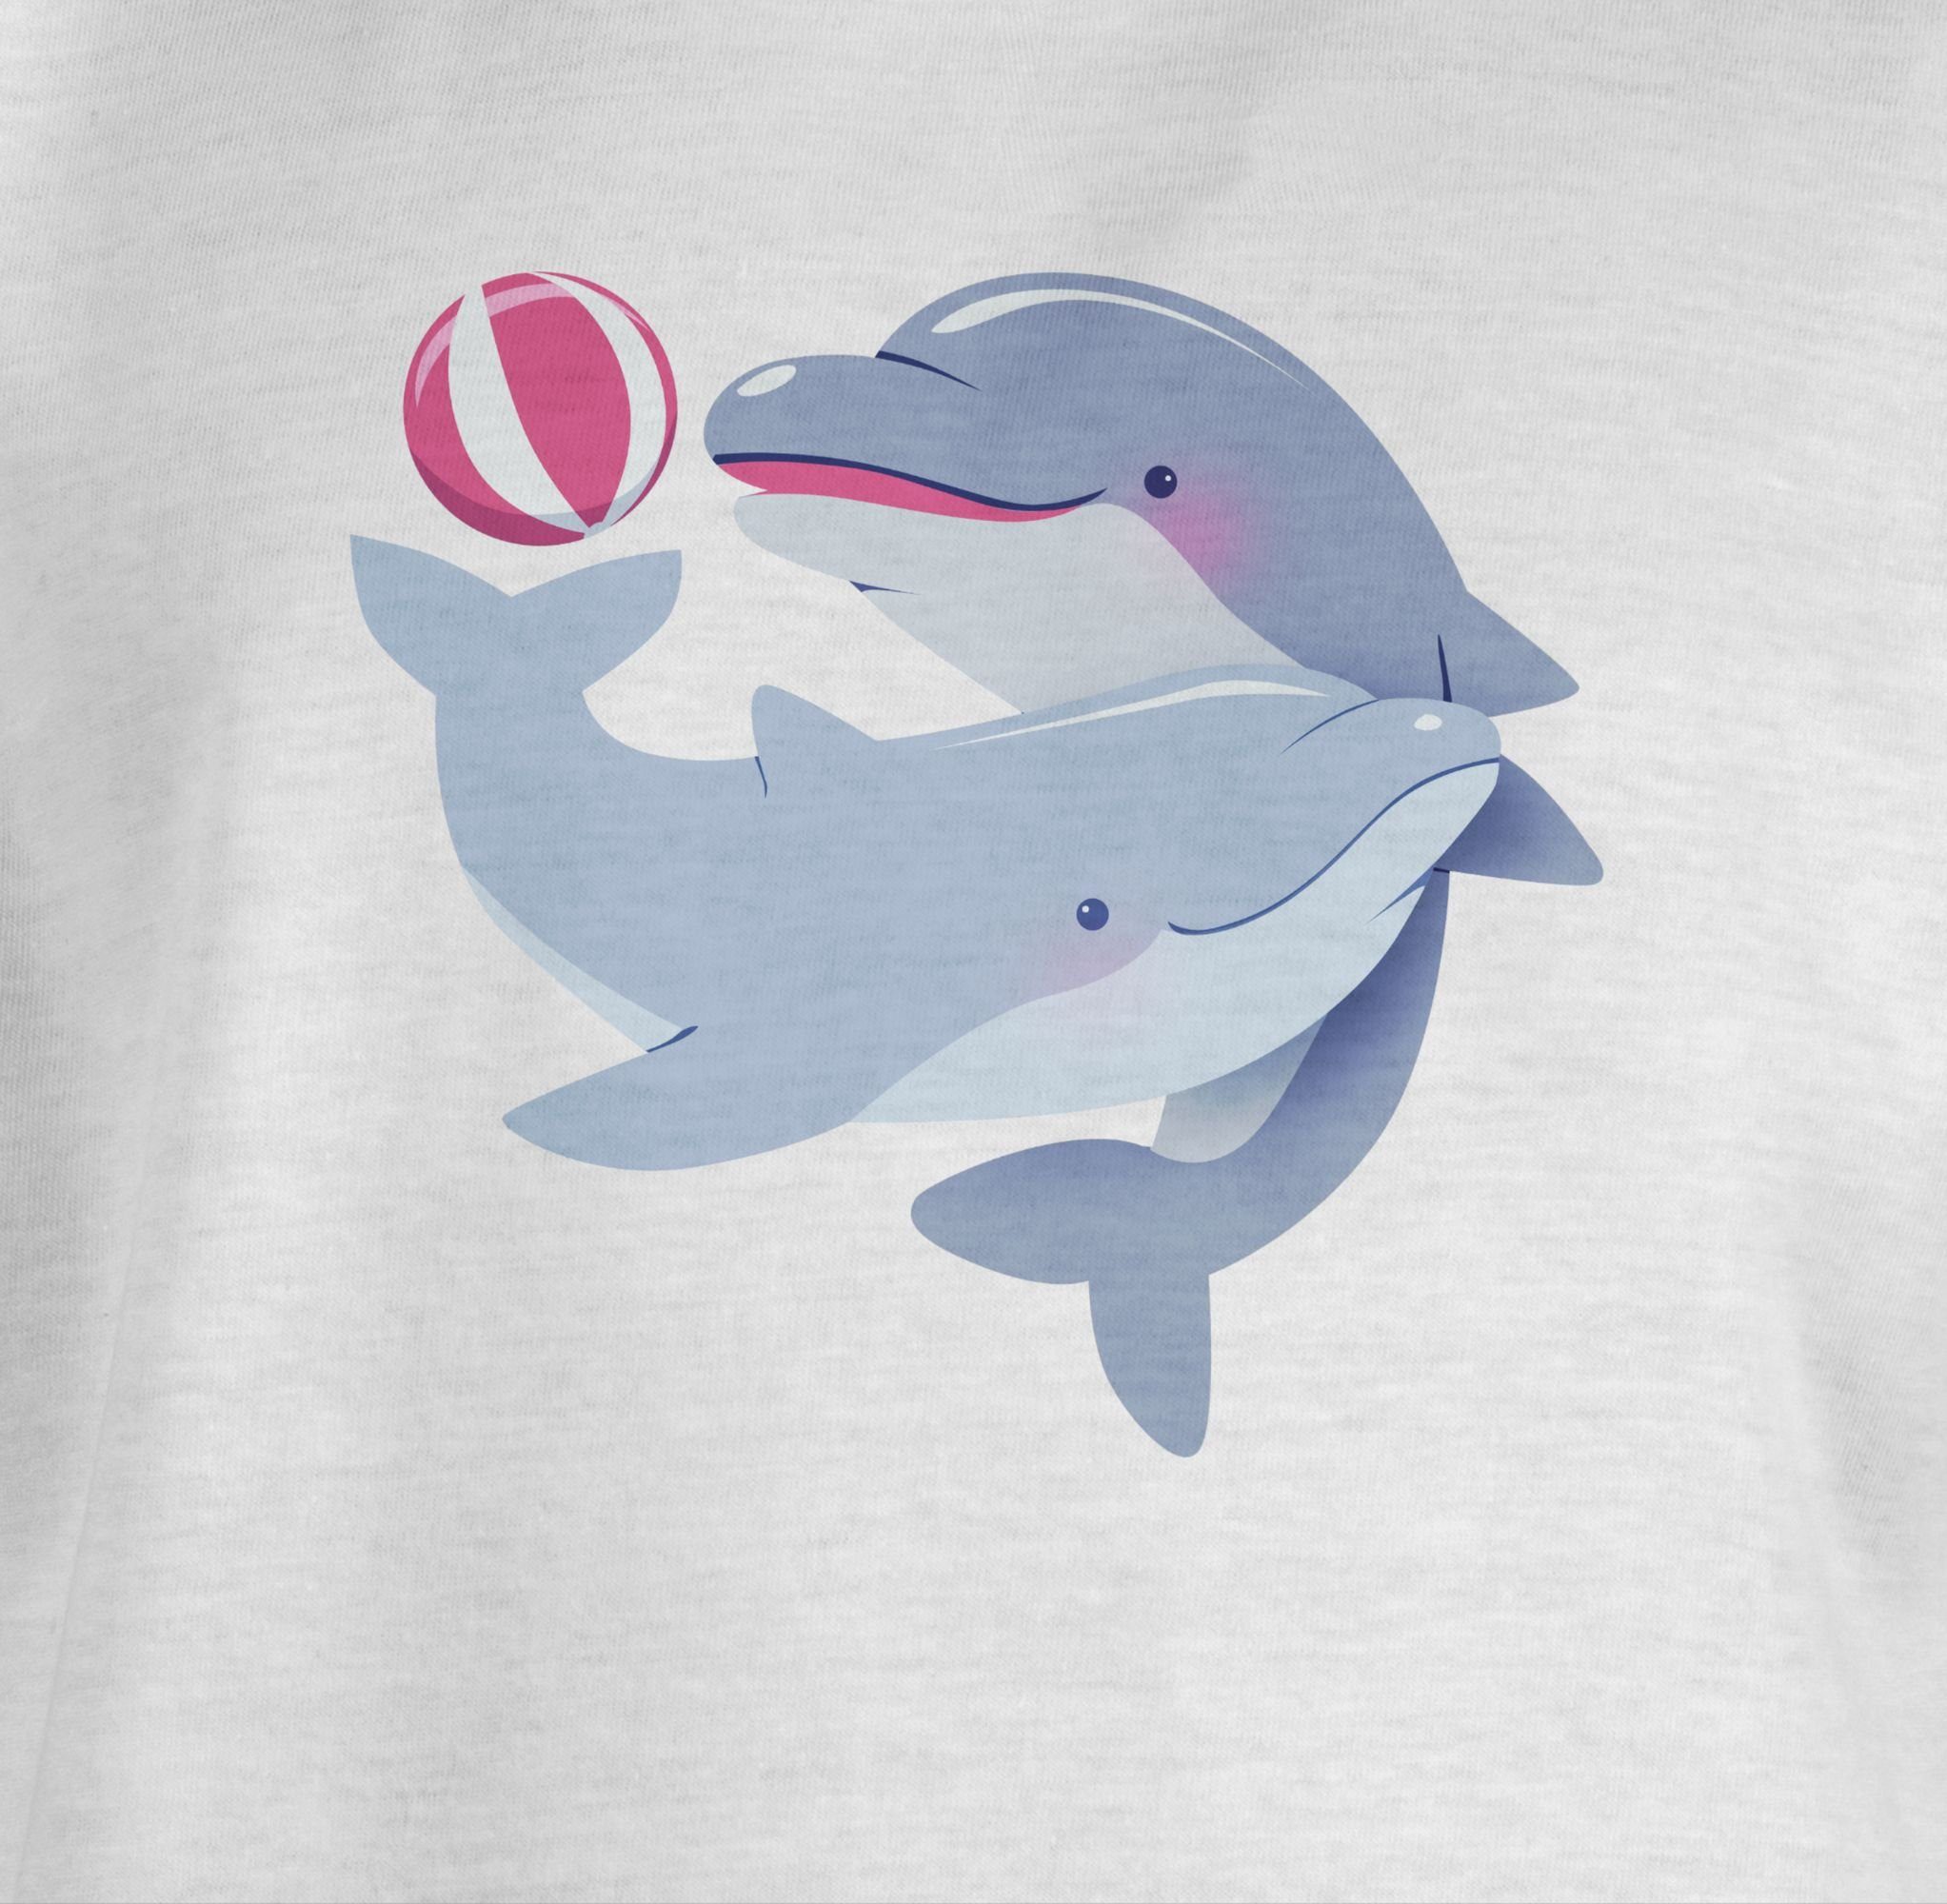 Shirtracer T-Shirt Delfine Tiermotiv Print 3 Weiß Animal